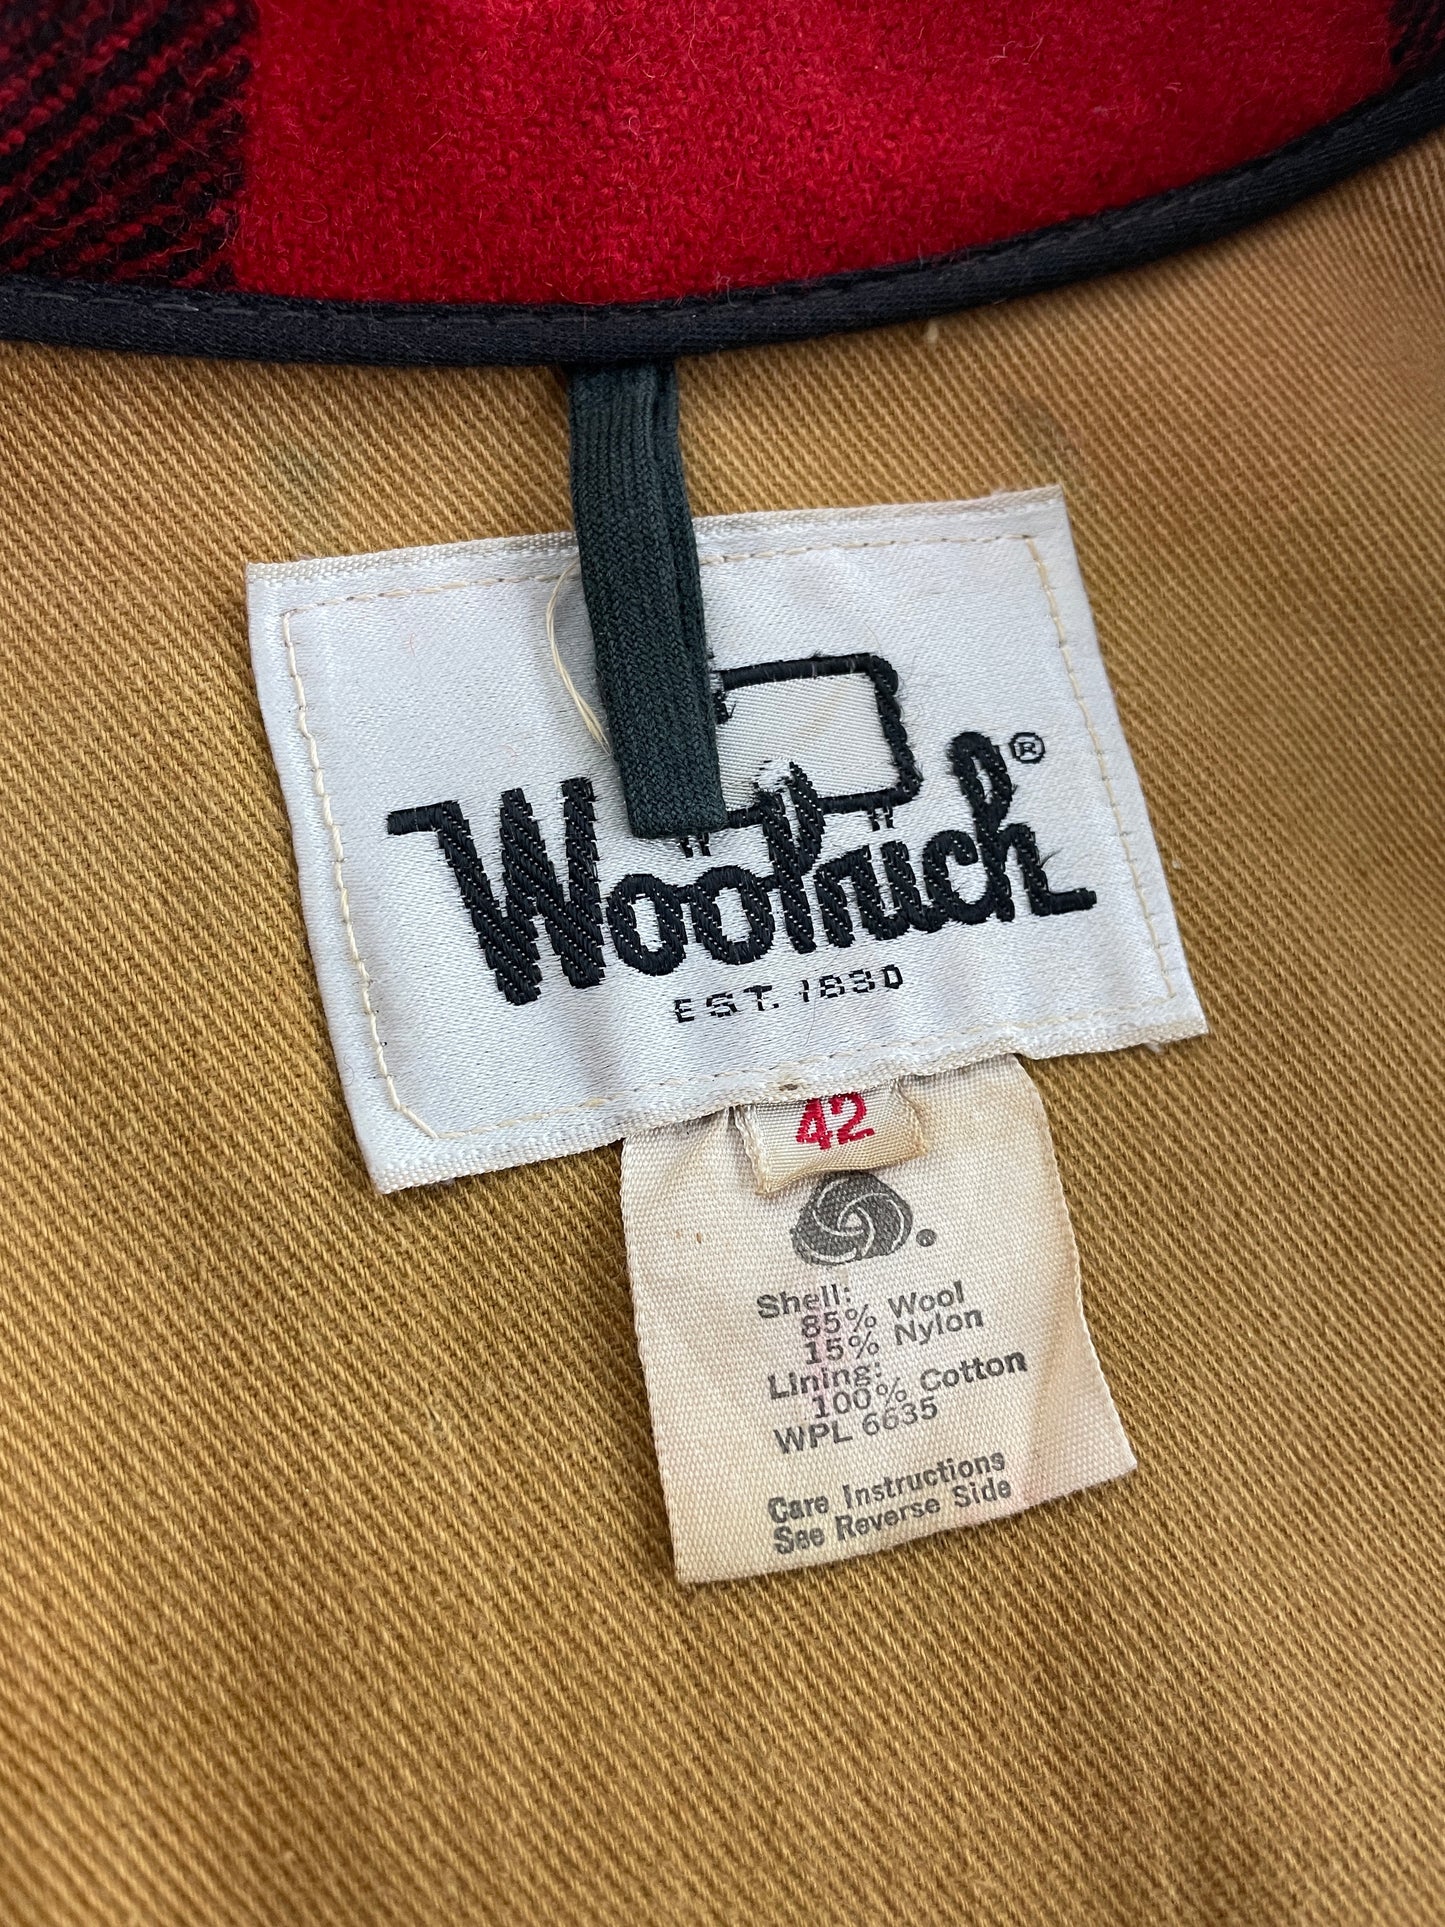 Woolrich Hunting Jacket [L]